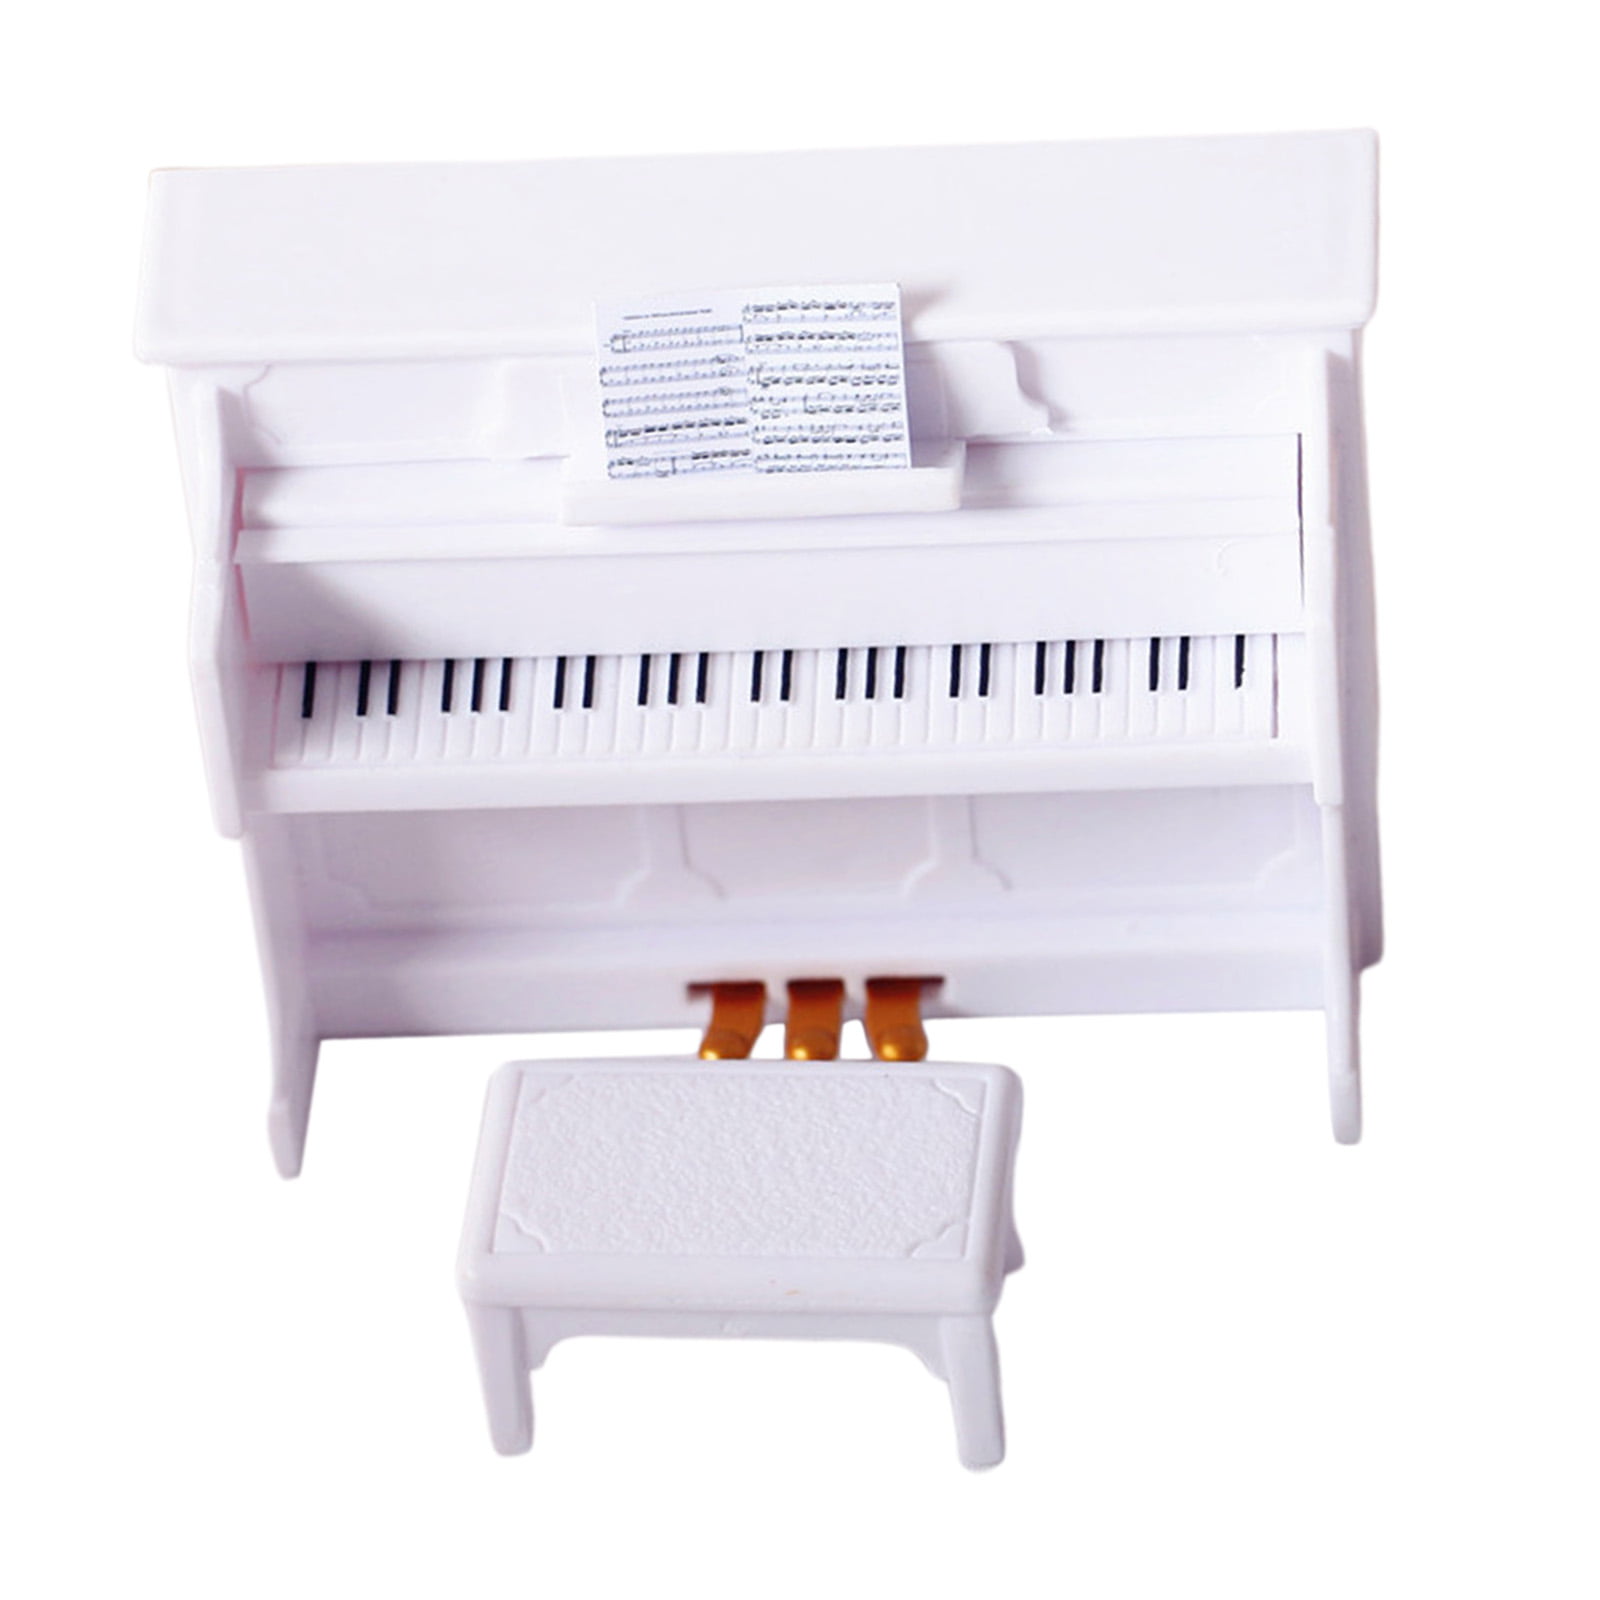 Upright Piano w/ Bench Mini miniature dollhouse furniture wooden 1-12 scale